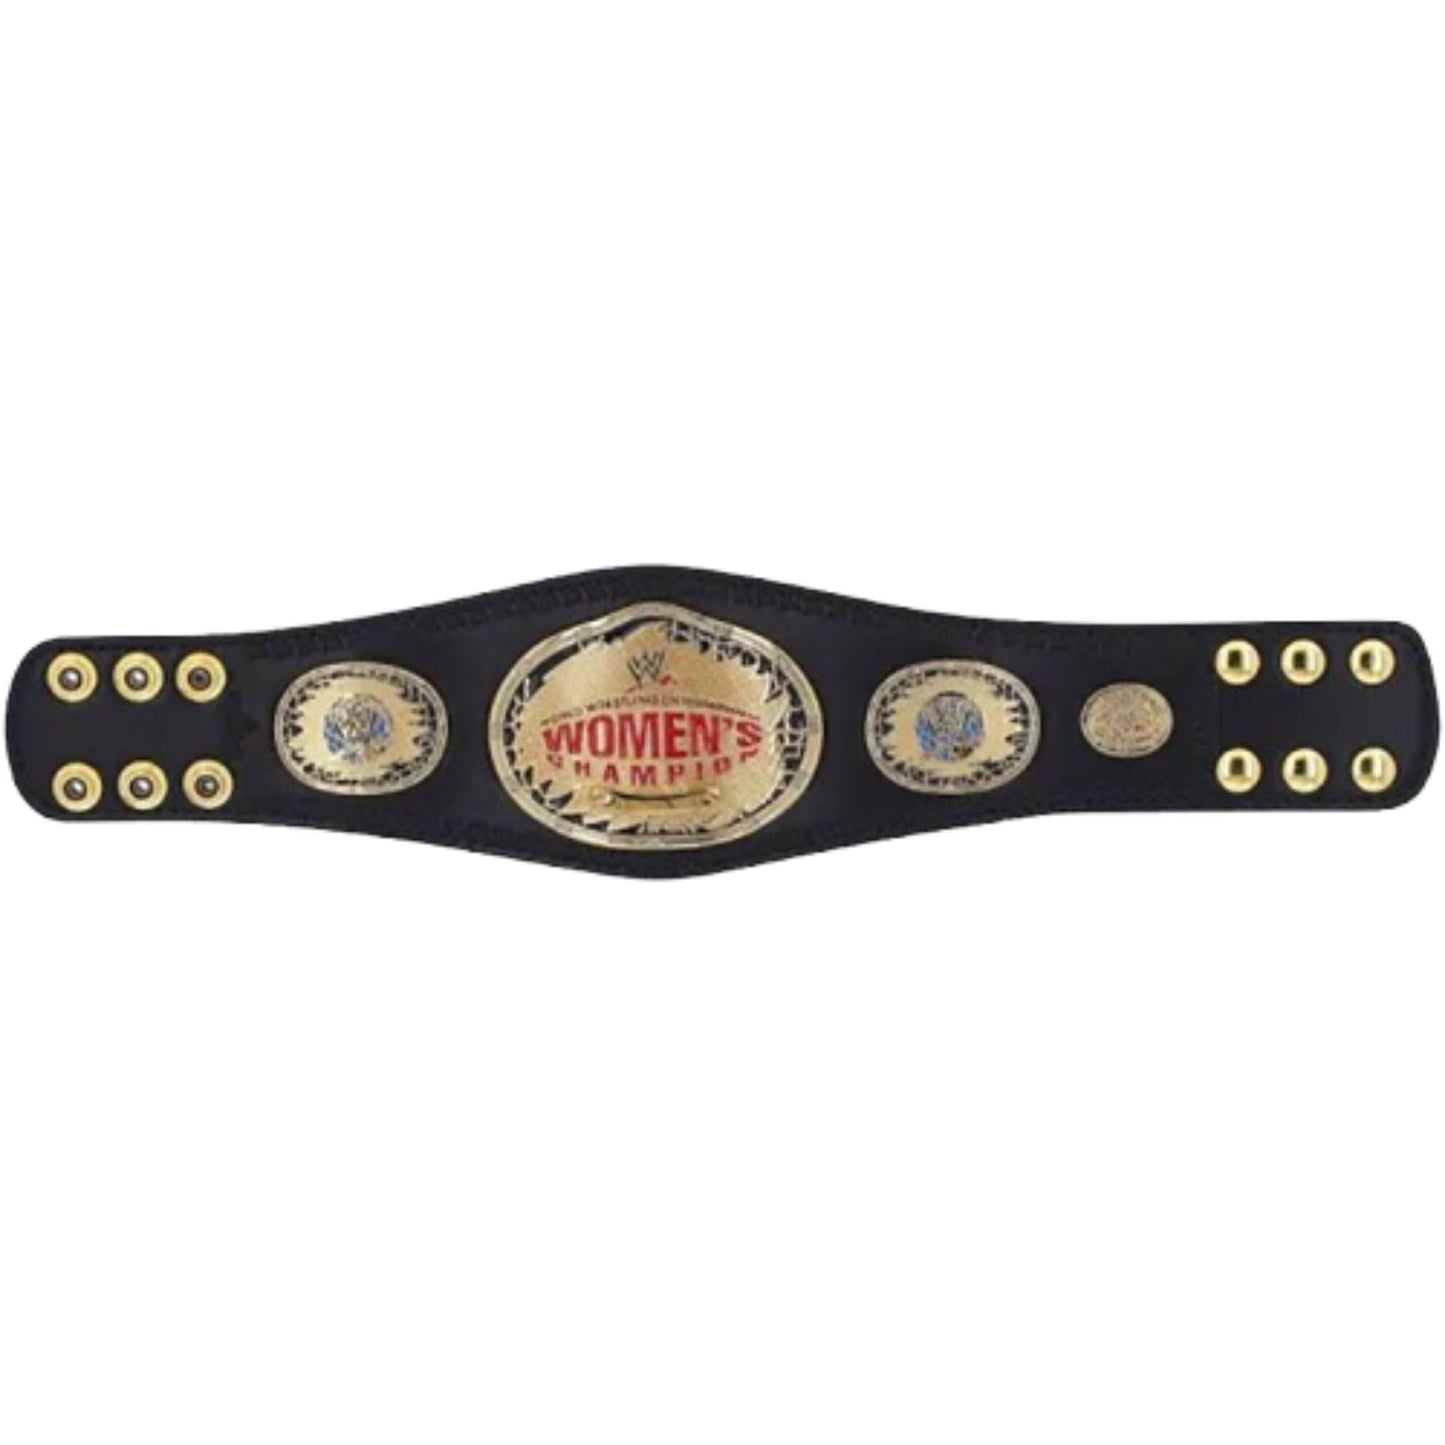 wwe attitude era women championship kids replica title belt